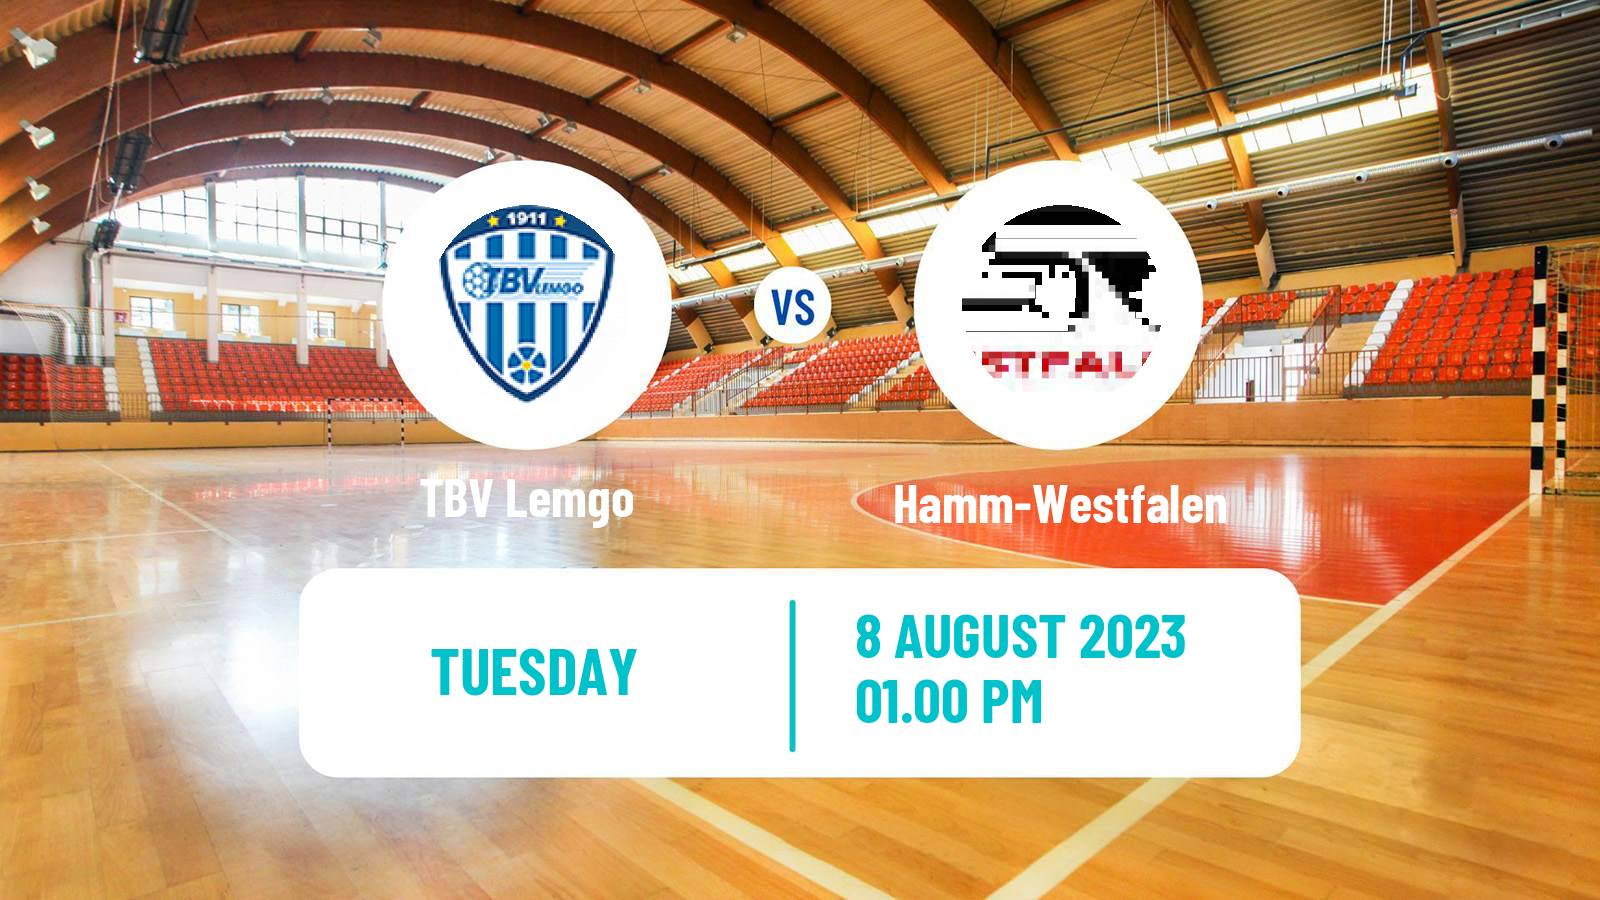 Handball Club Friendly Hanbdall TBV Lemgo - Hamm-Westfalen